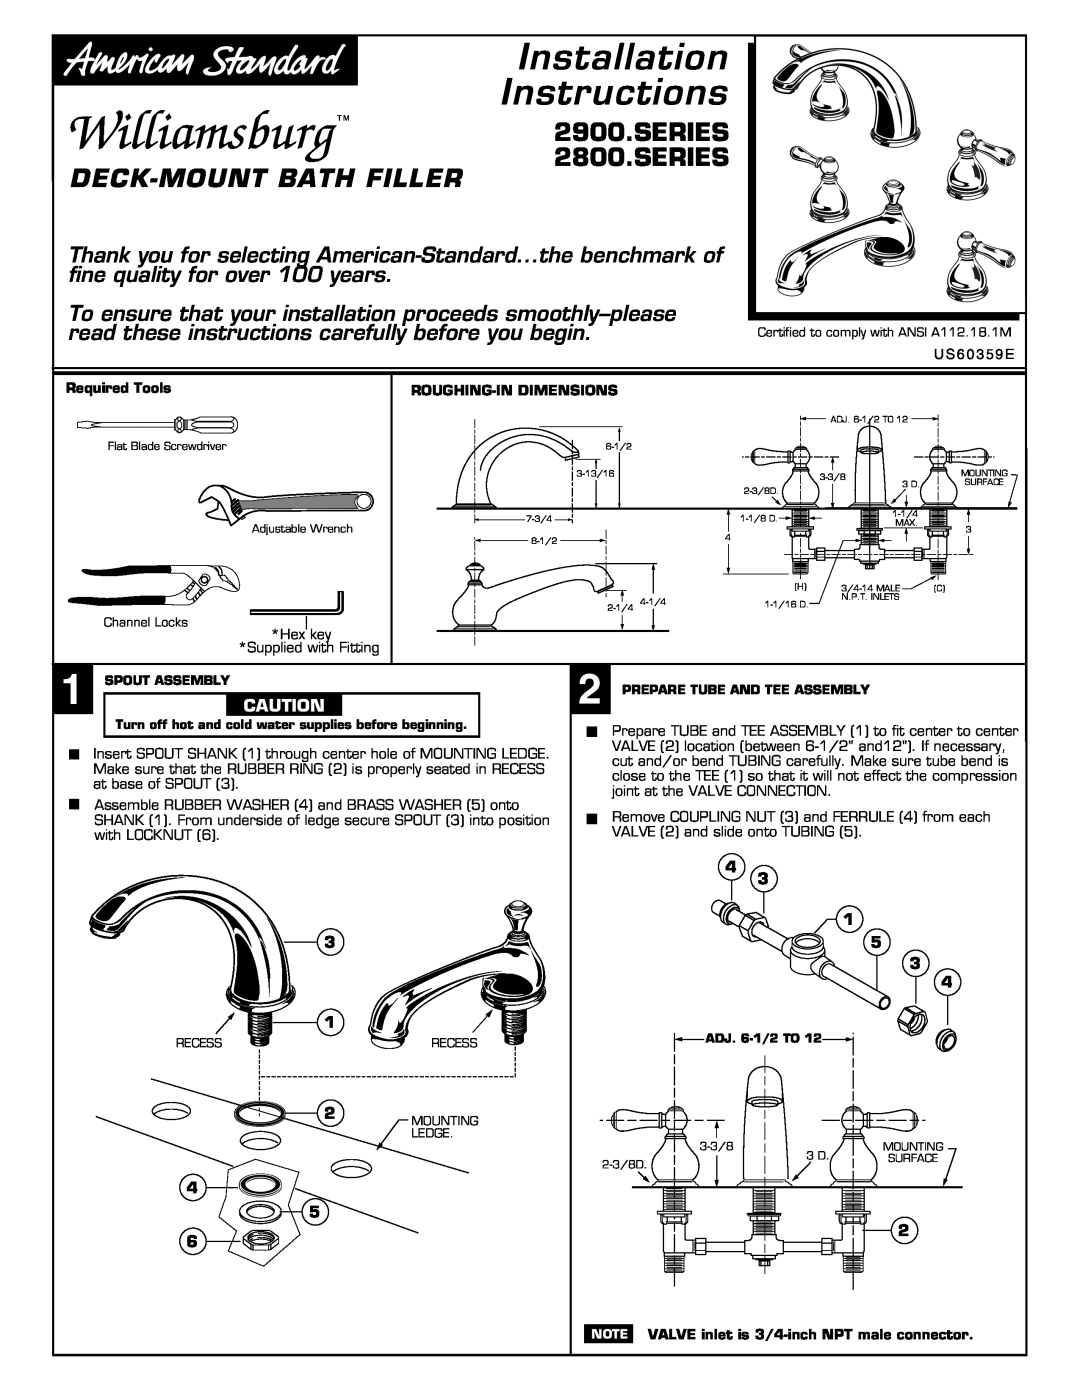 American Standard 2800.SERIES installation instructions Deck-Mountbath Filler, Williamsburg, Installation Instructions 